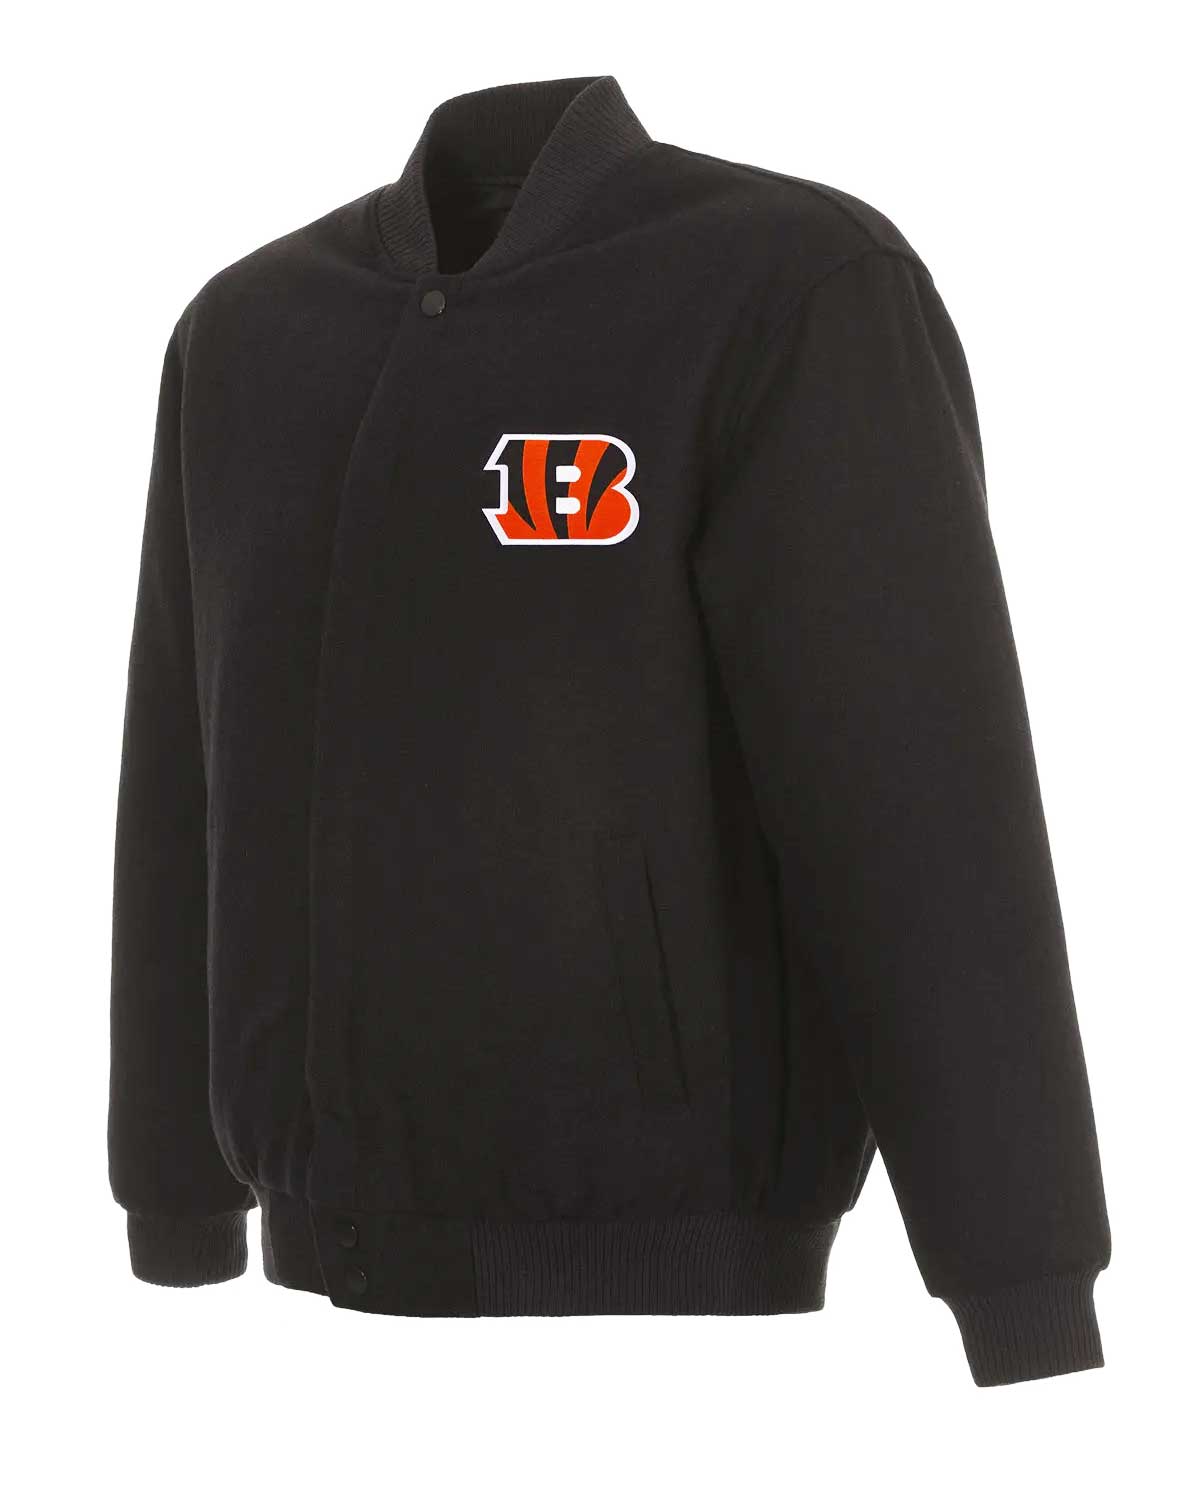 Cincinnati Bengals Black Wool Bomber Jacket | Elite Jacket